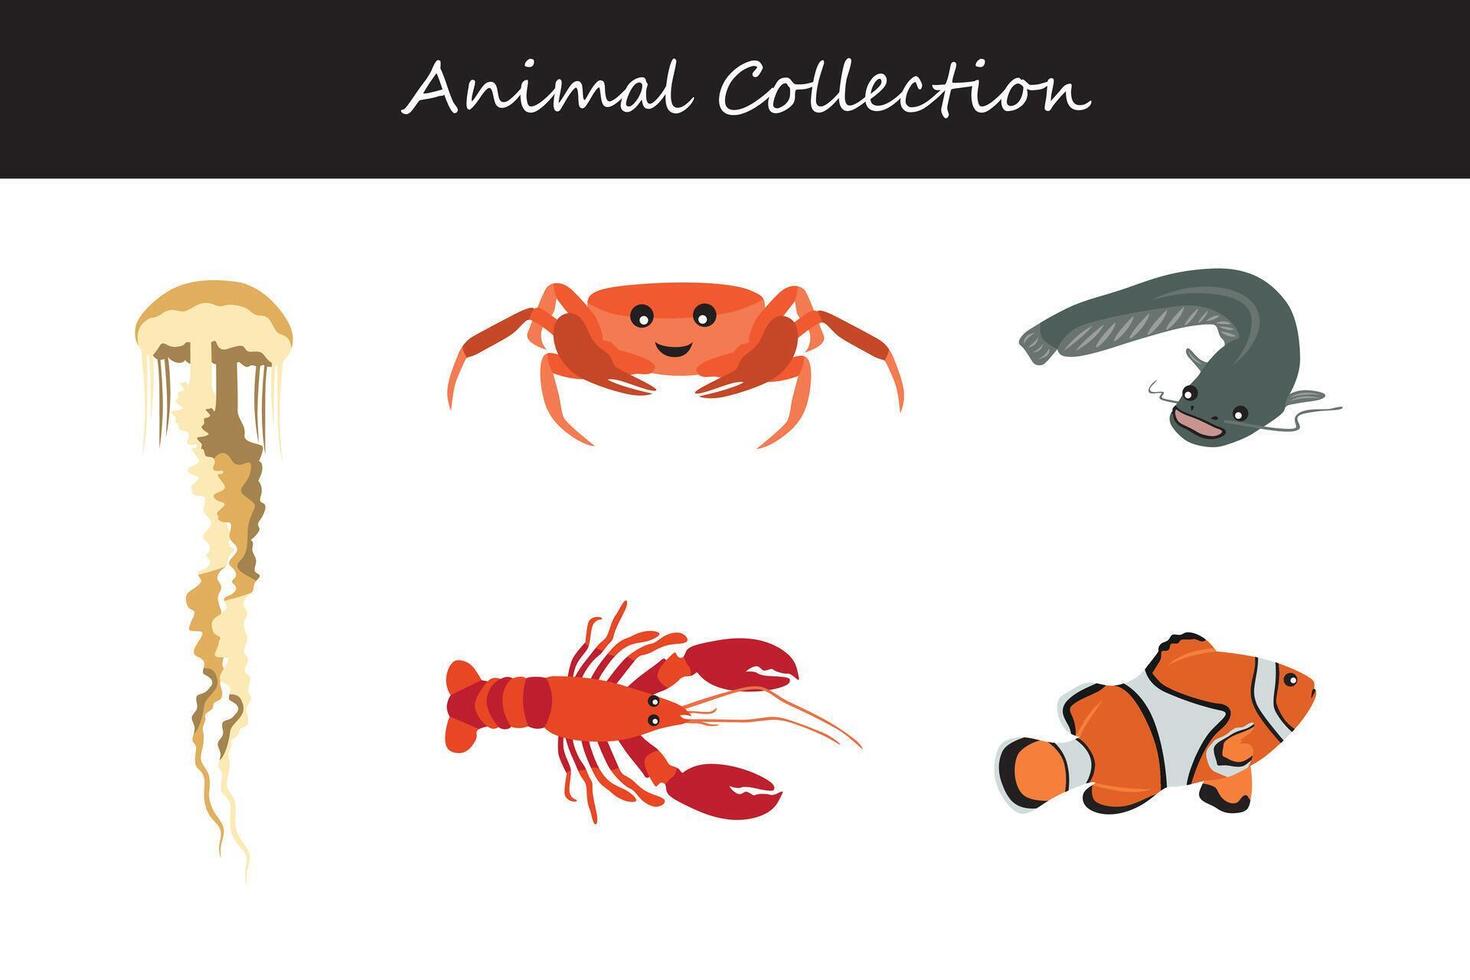 animaux collection. plat style illustration. vecteur